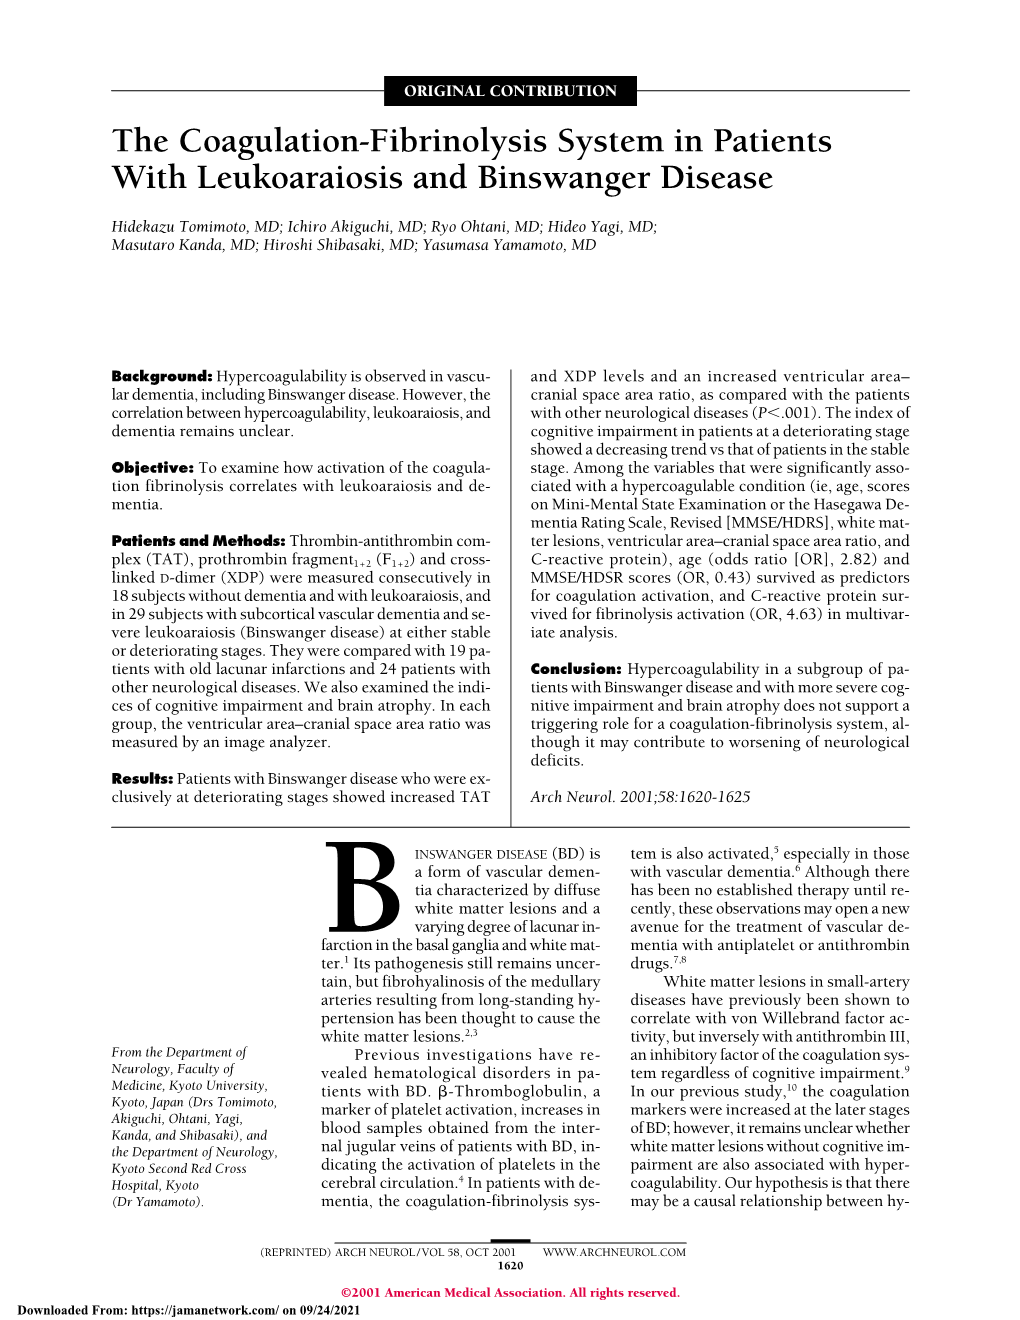 The Coagulation-Fibrinolysis System in Patients with Leukoaraiosis and Binswanger Disease